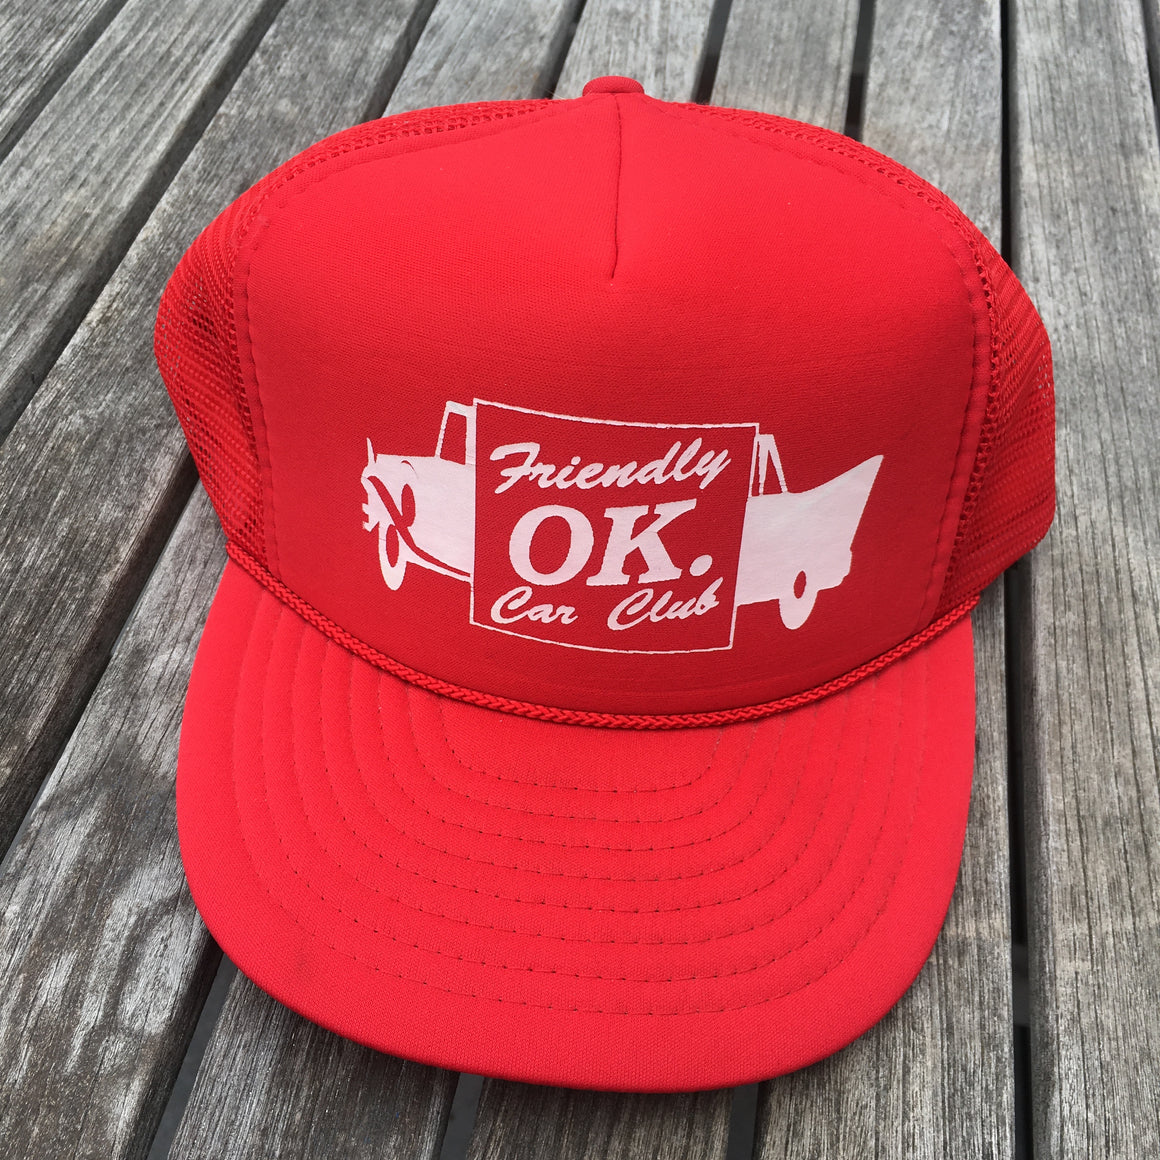 Vintage OK Car Club snapback hat